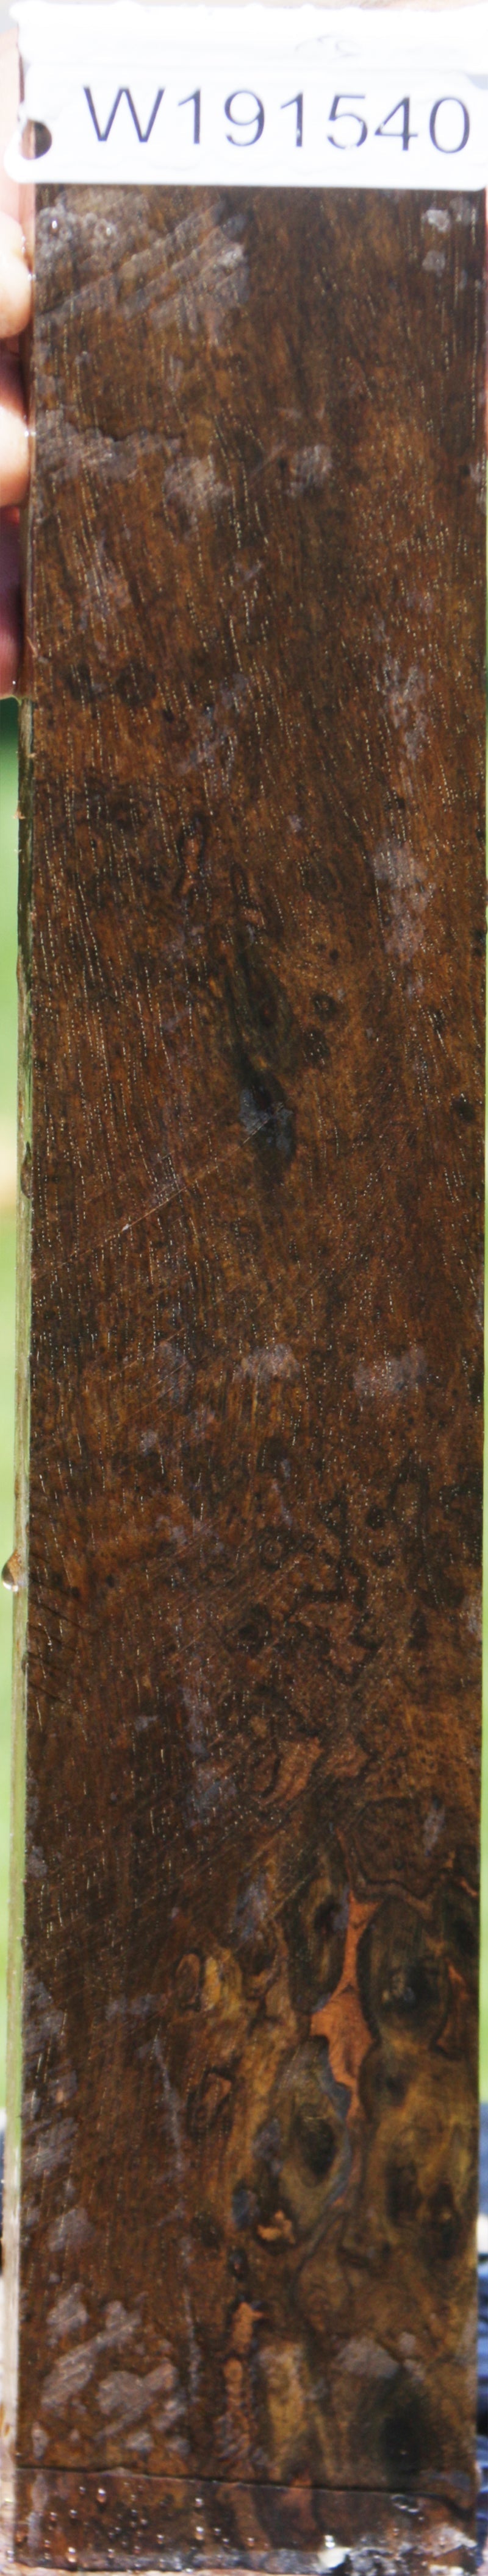 Brazilian Blackheart Lumber